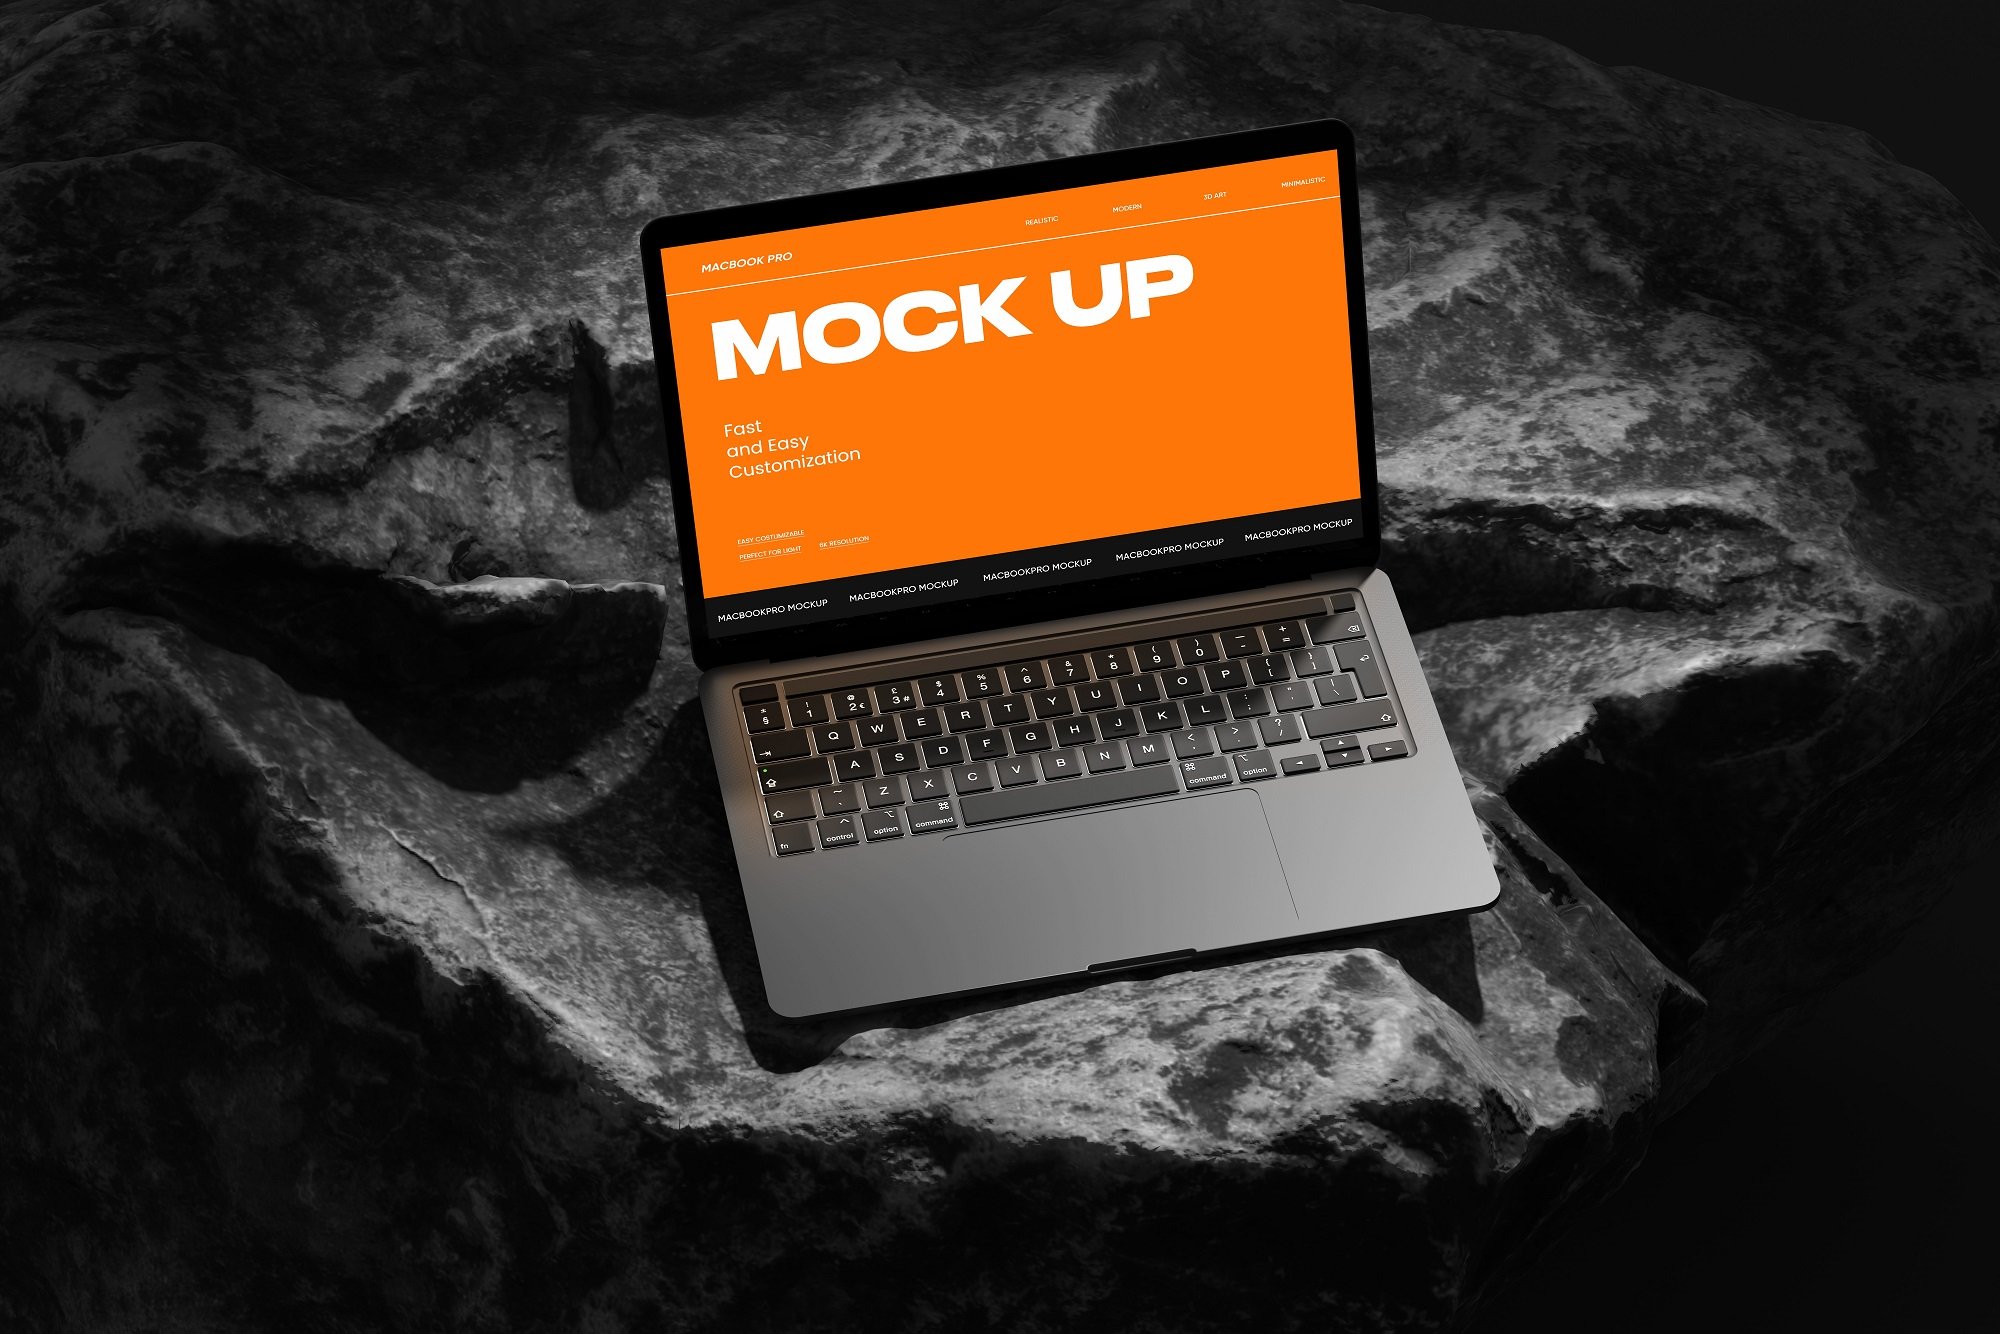 Macbook Pro Mockup Vol.8 cover image.